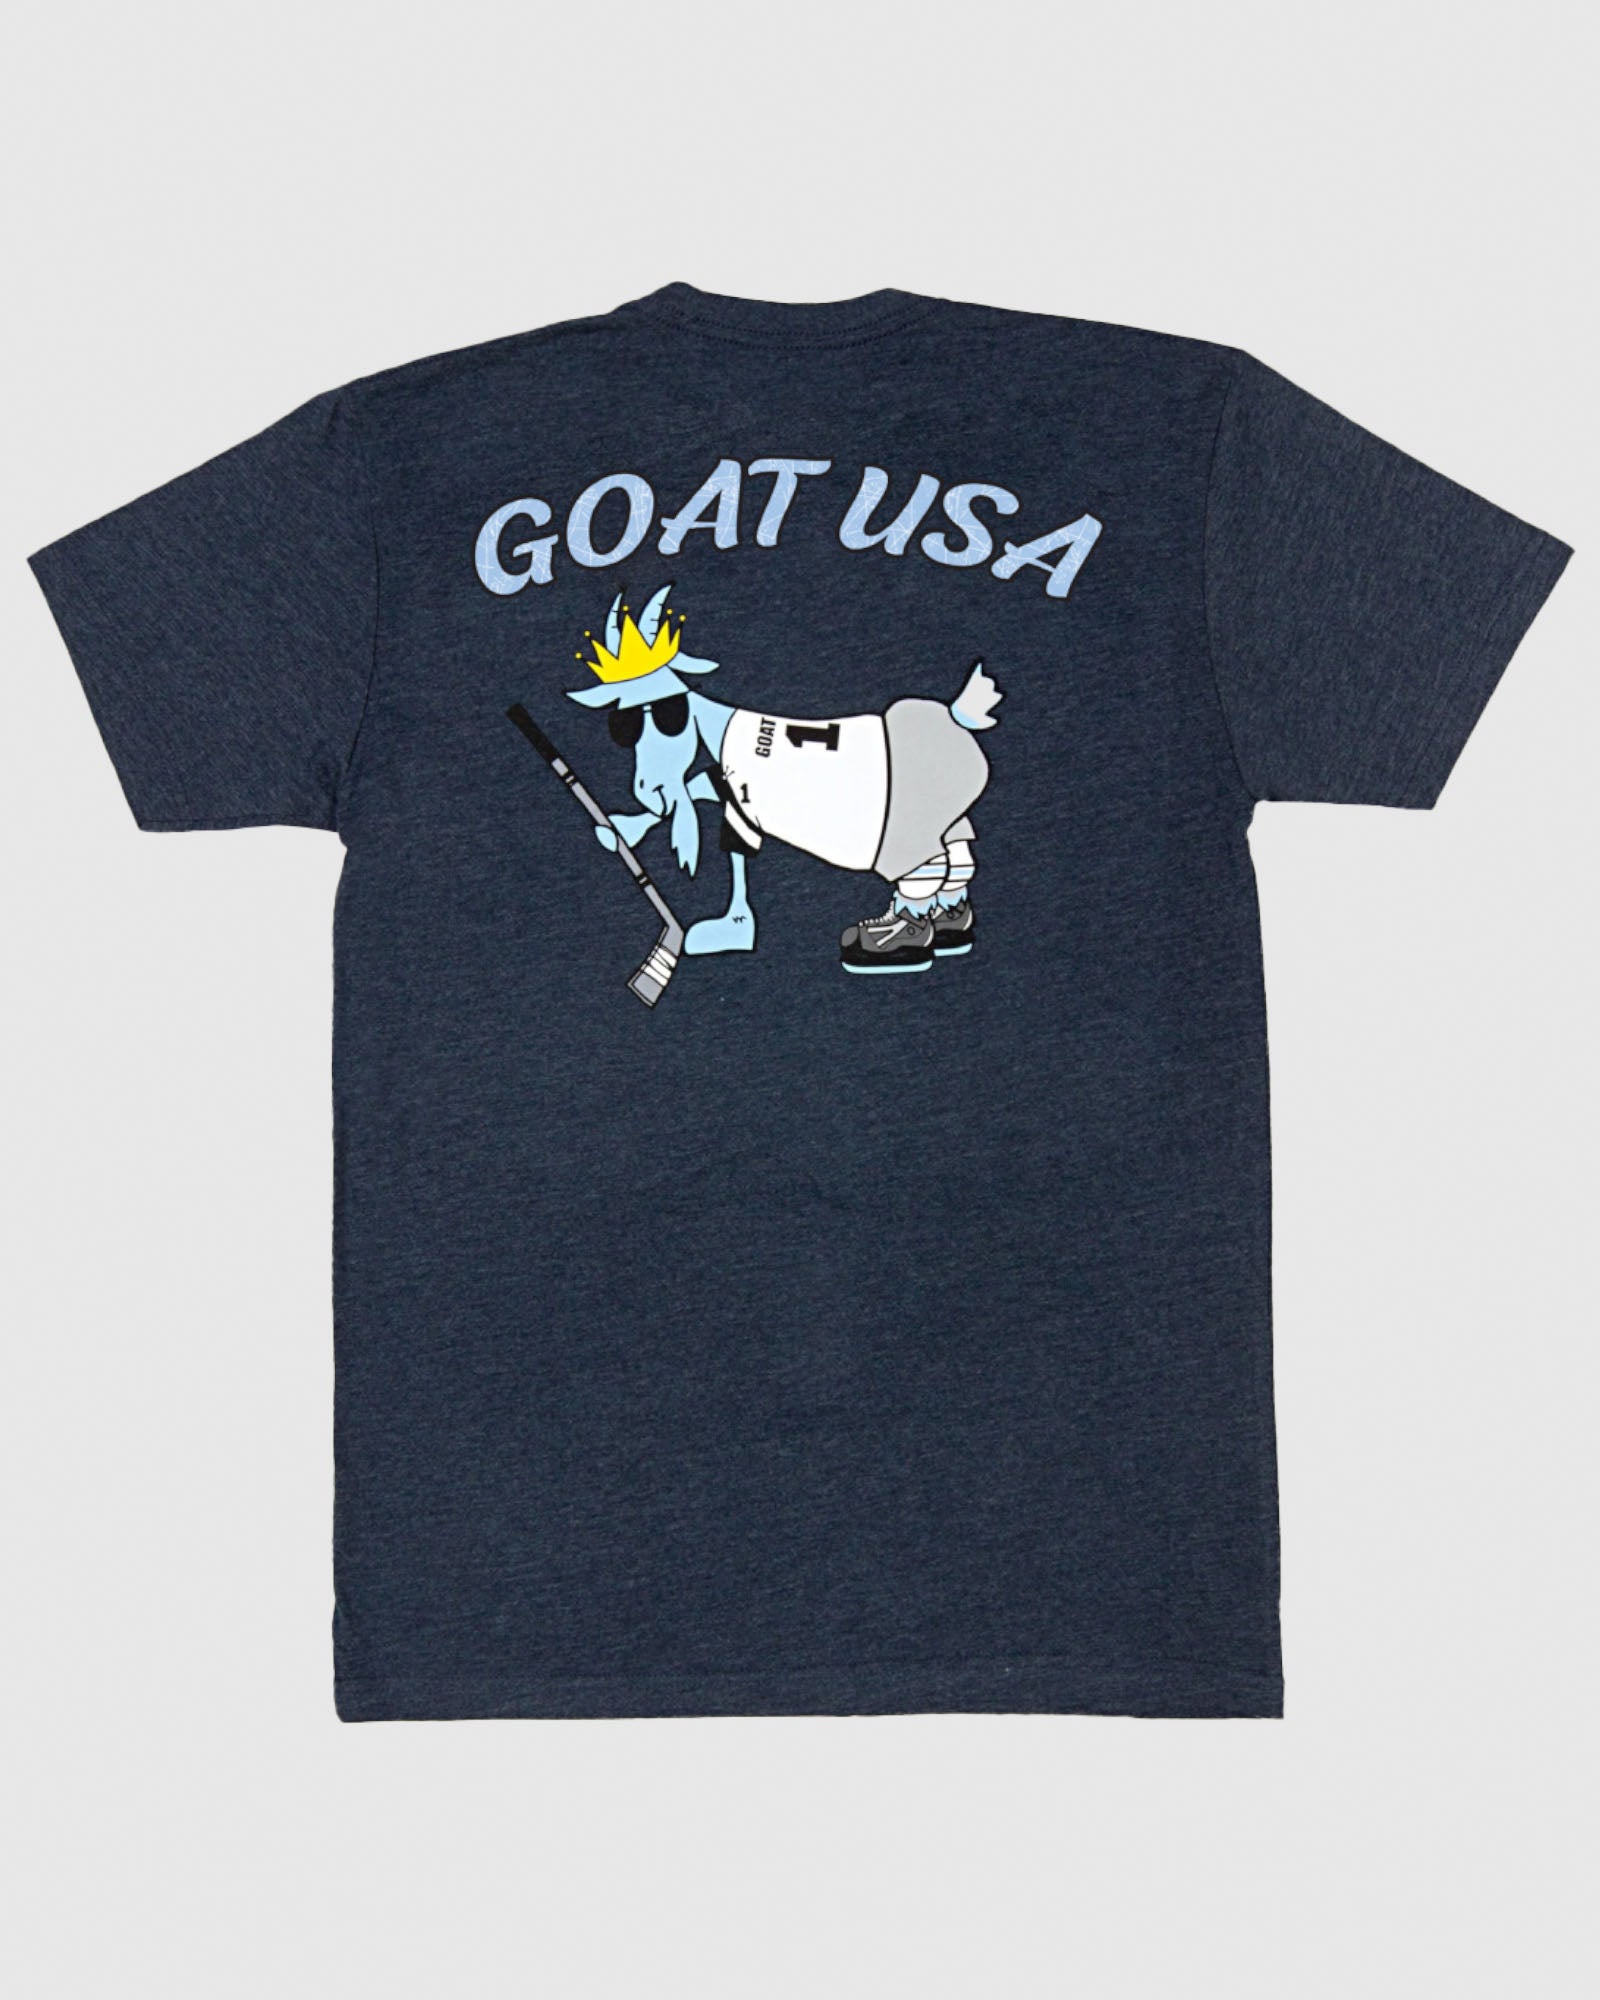 Goat USA Youth Hockey T-Shirt Apparel Goat USA Navy Youth Small 